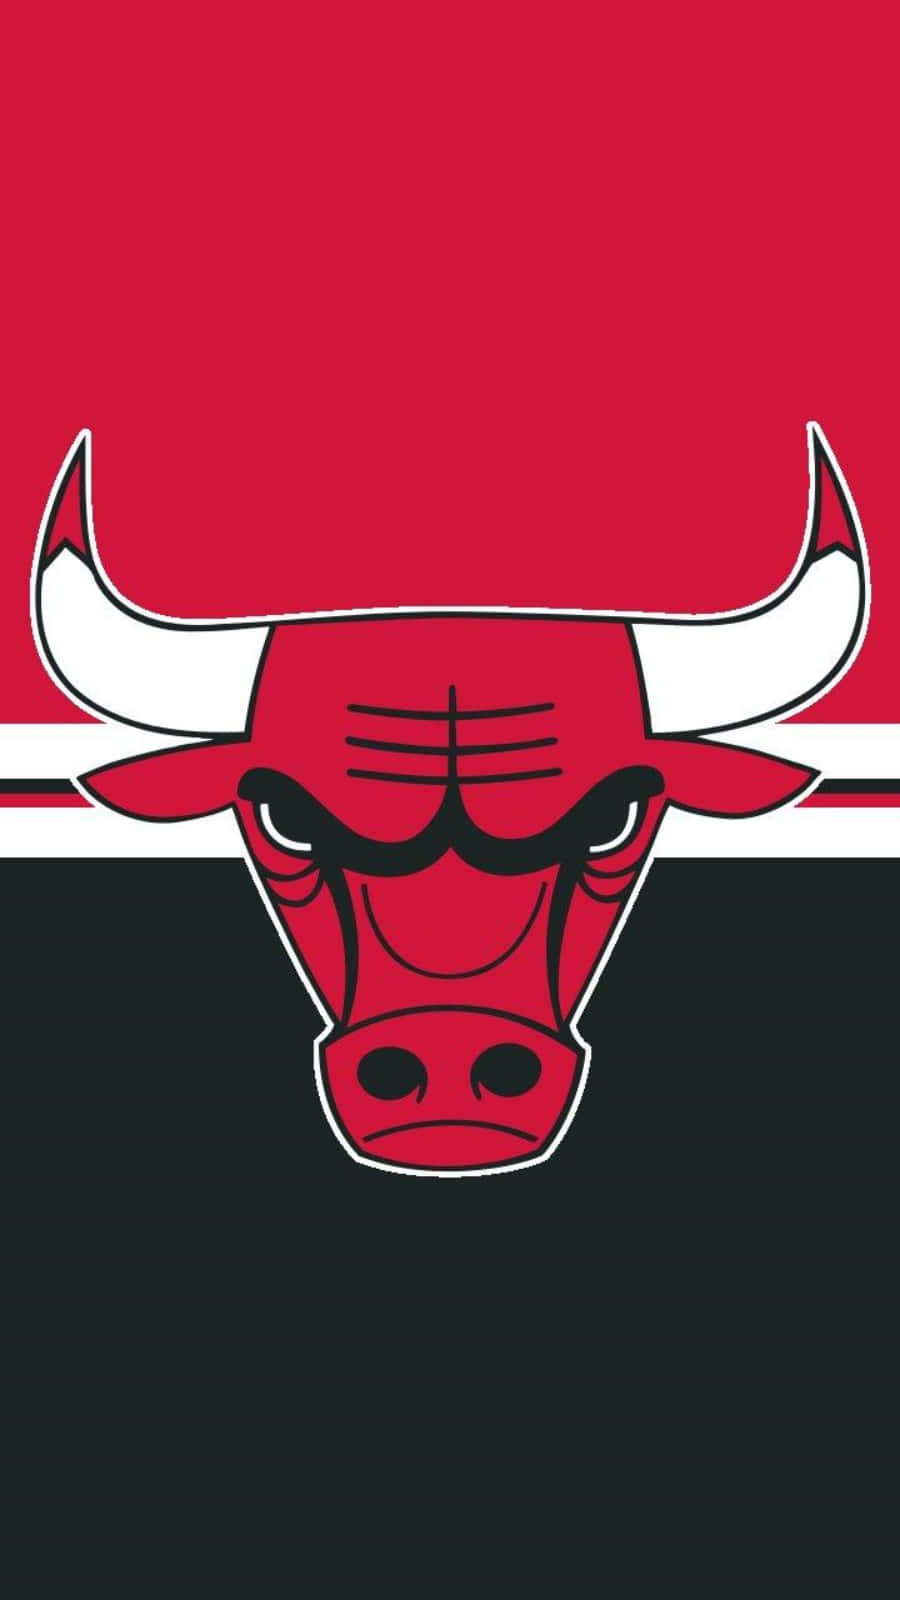 New Chicago Bulls Themed iPhone Wallpaper